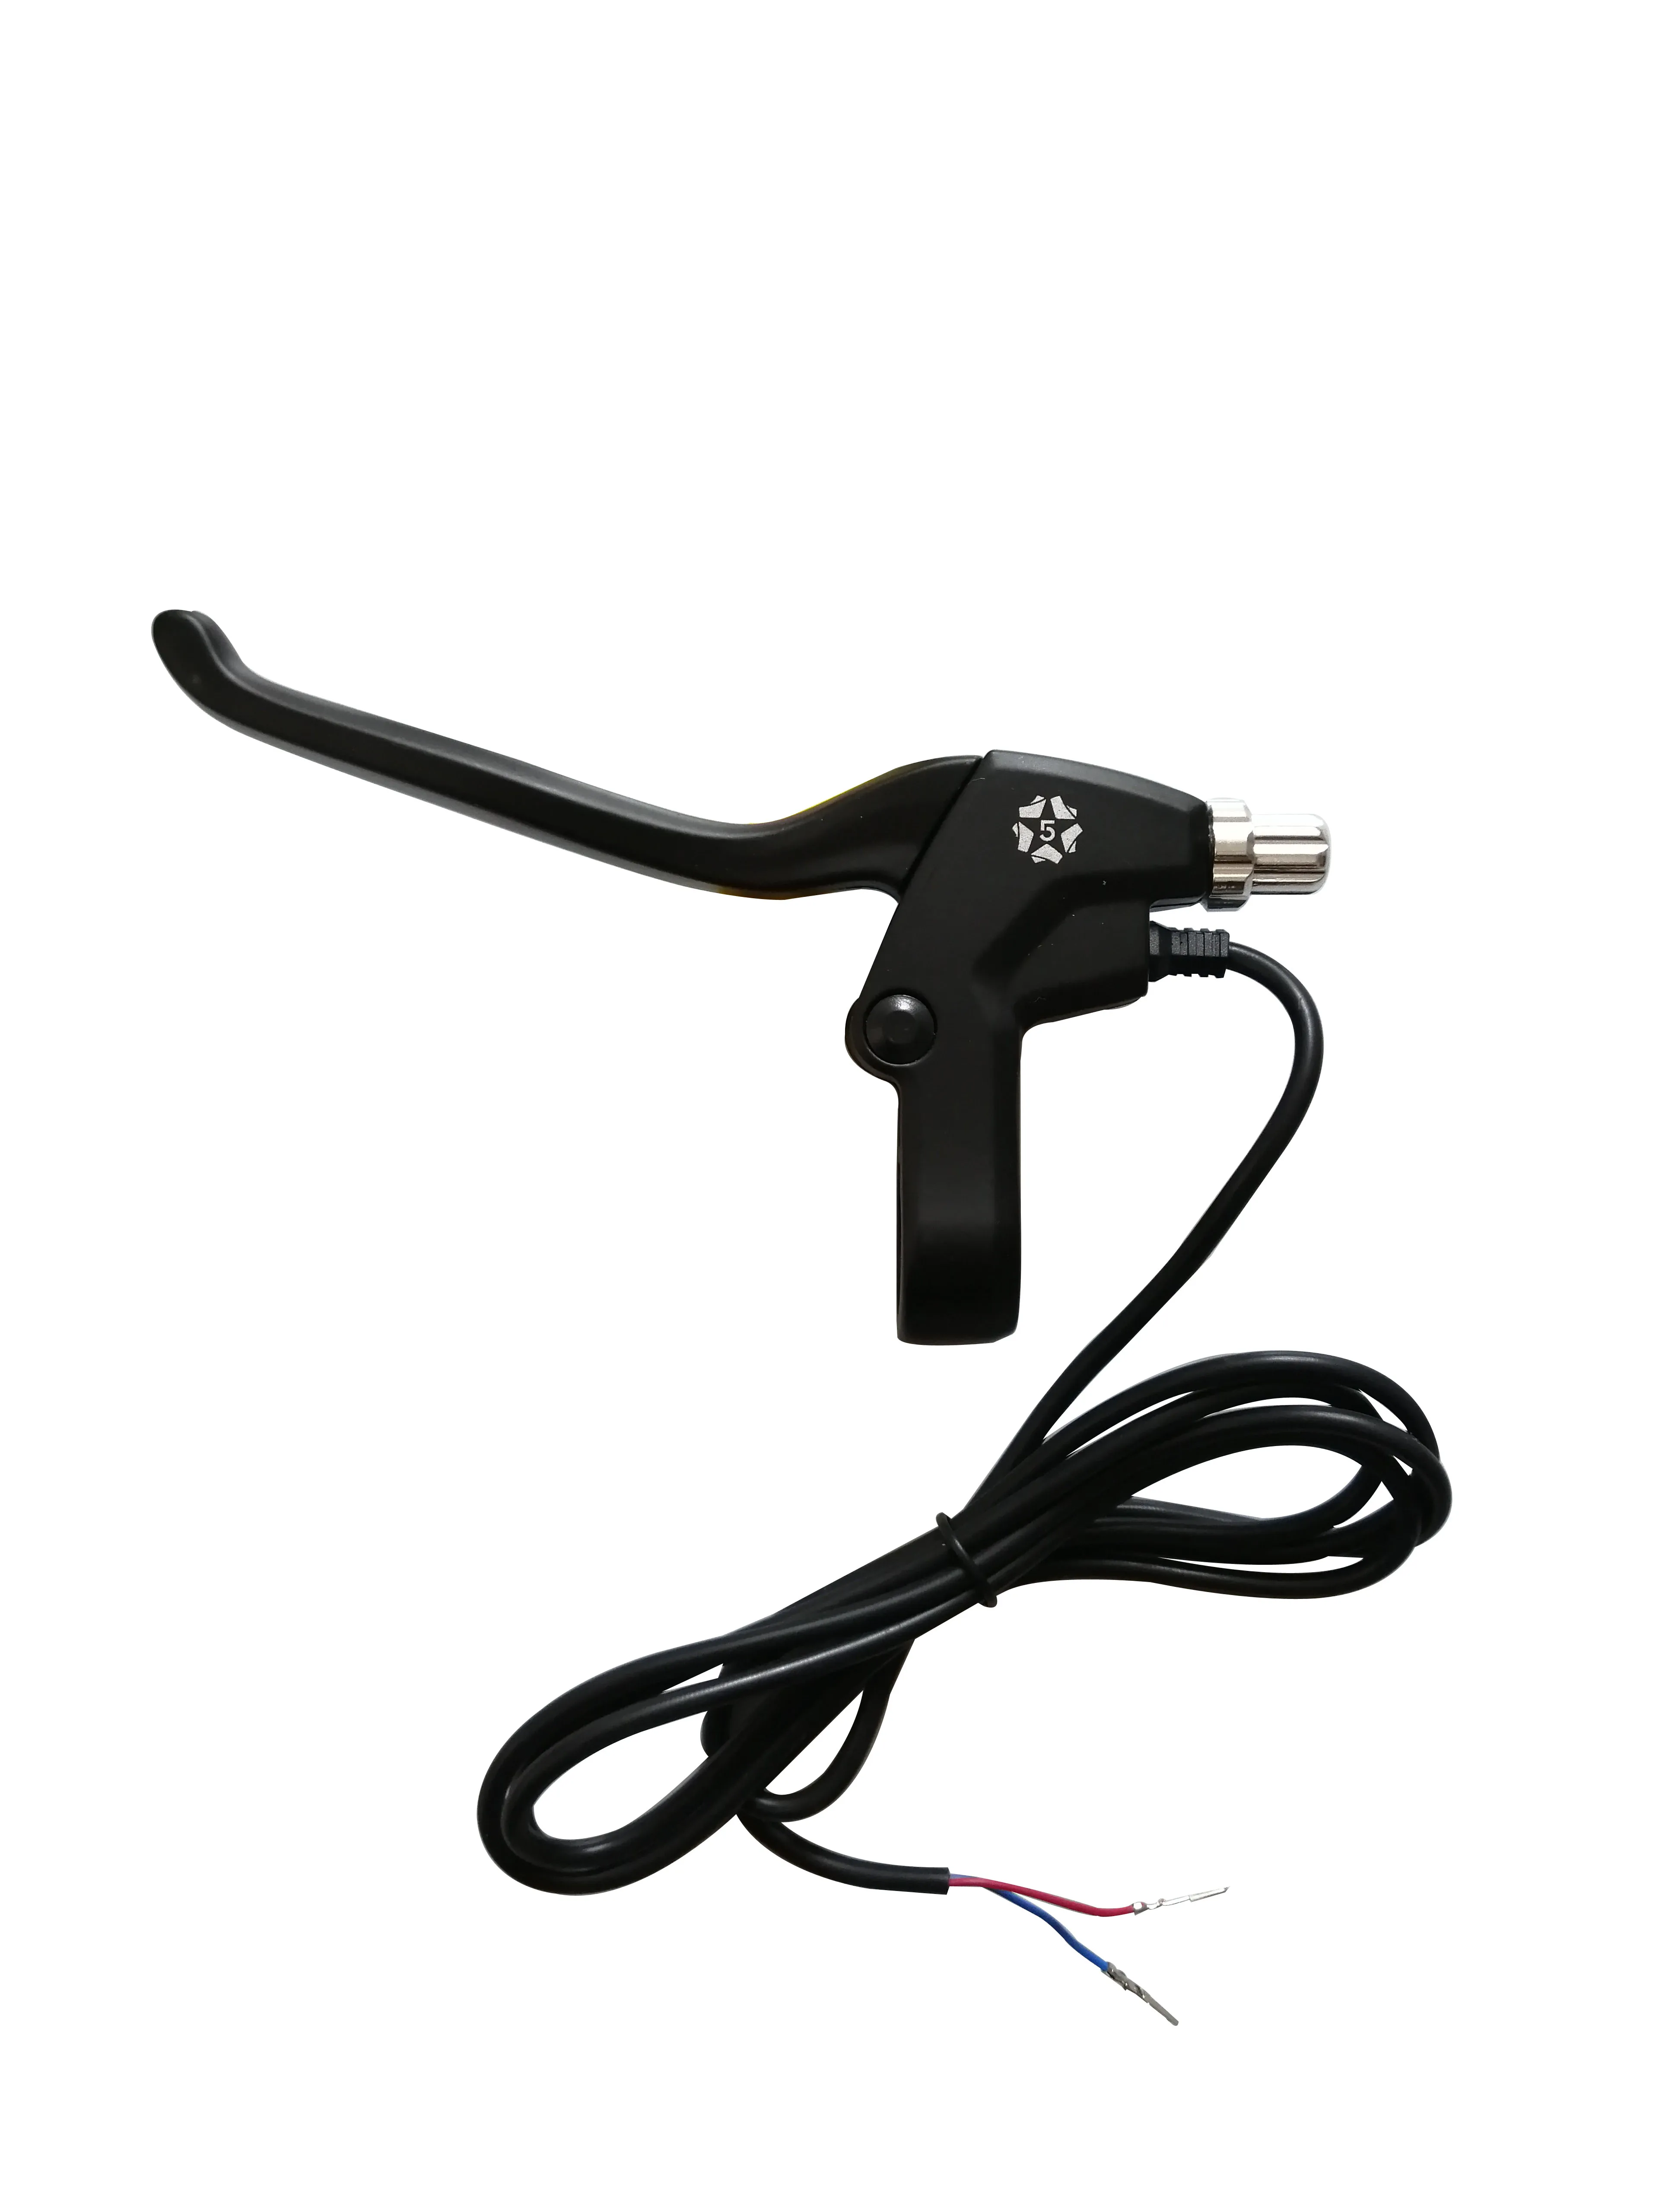 Тормоз для SPEEDWAY MINI4 электрический скутер ruima mini4 скутер аксессуары для тормозной ручки